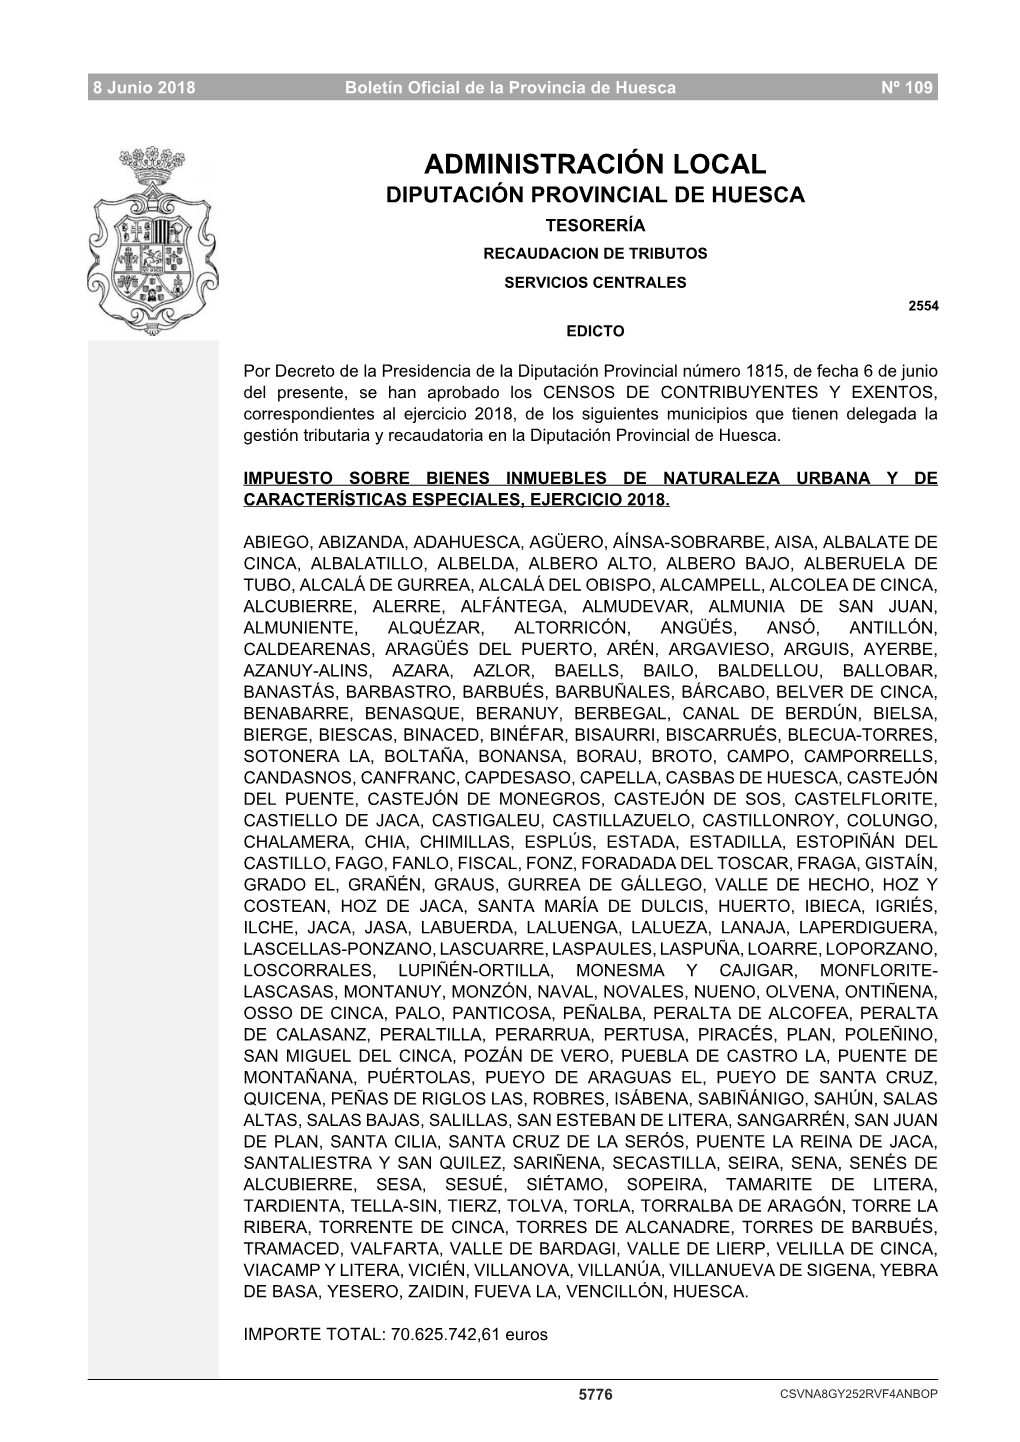 Administración Local Diputación Provincial De Huesca Tesorería Recaudacion De Tributos Servicios Centrales 2554 Edicto